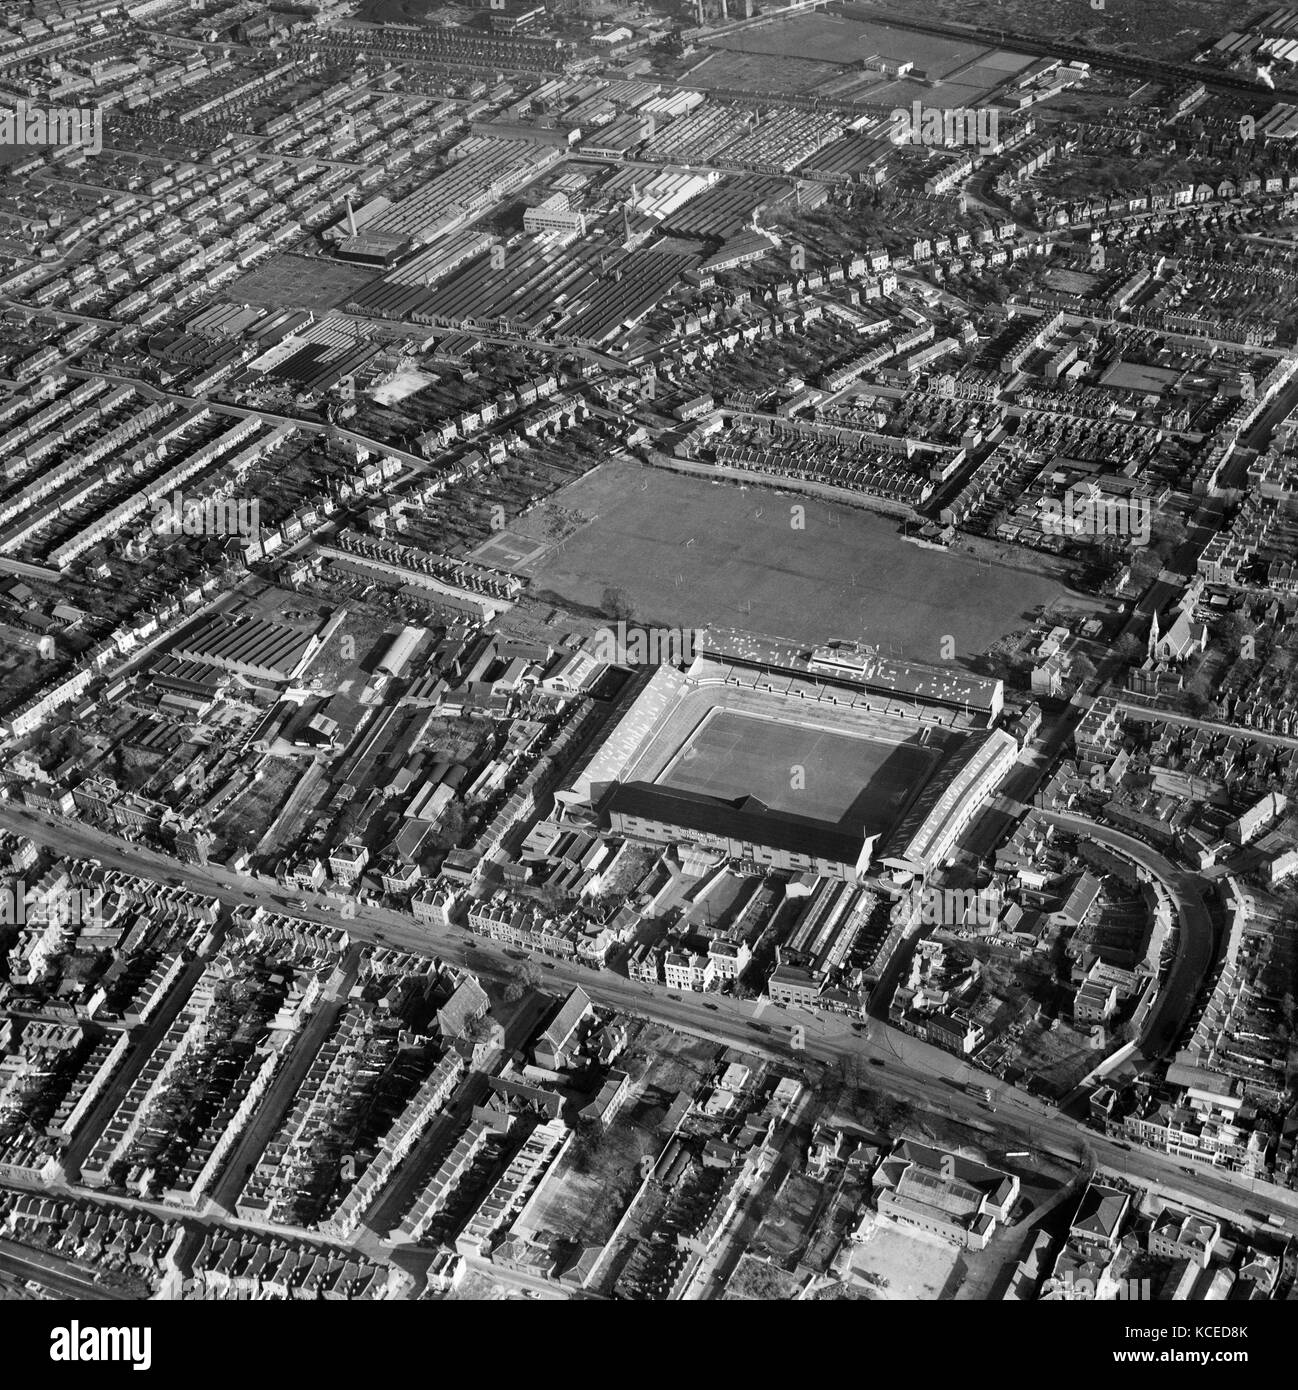 White Hart Lane, Tottenham, Haringey, Greater London. The stadium of Tottenham Hotspur Football Club, photographed in November 1949 by Aerofilms. Stock Photo